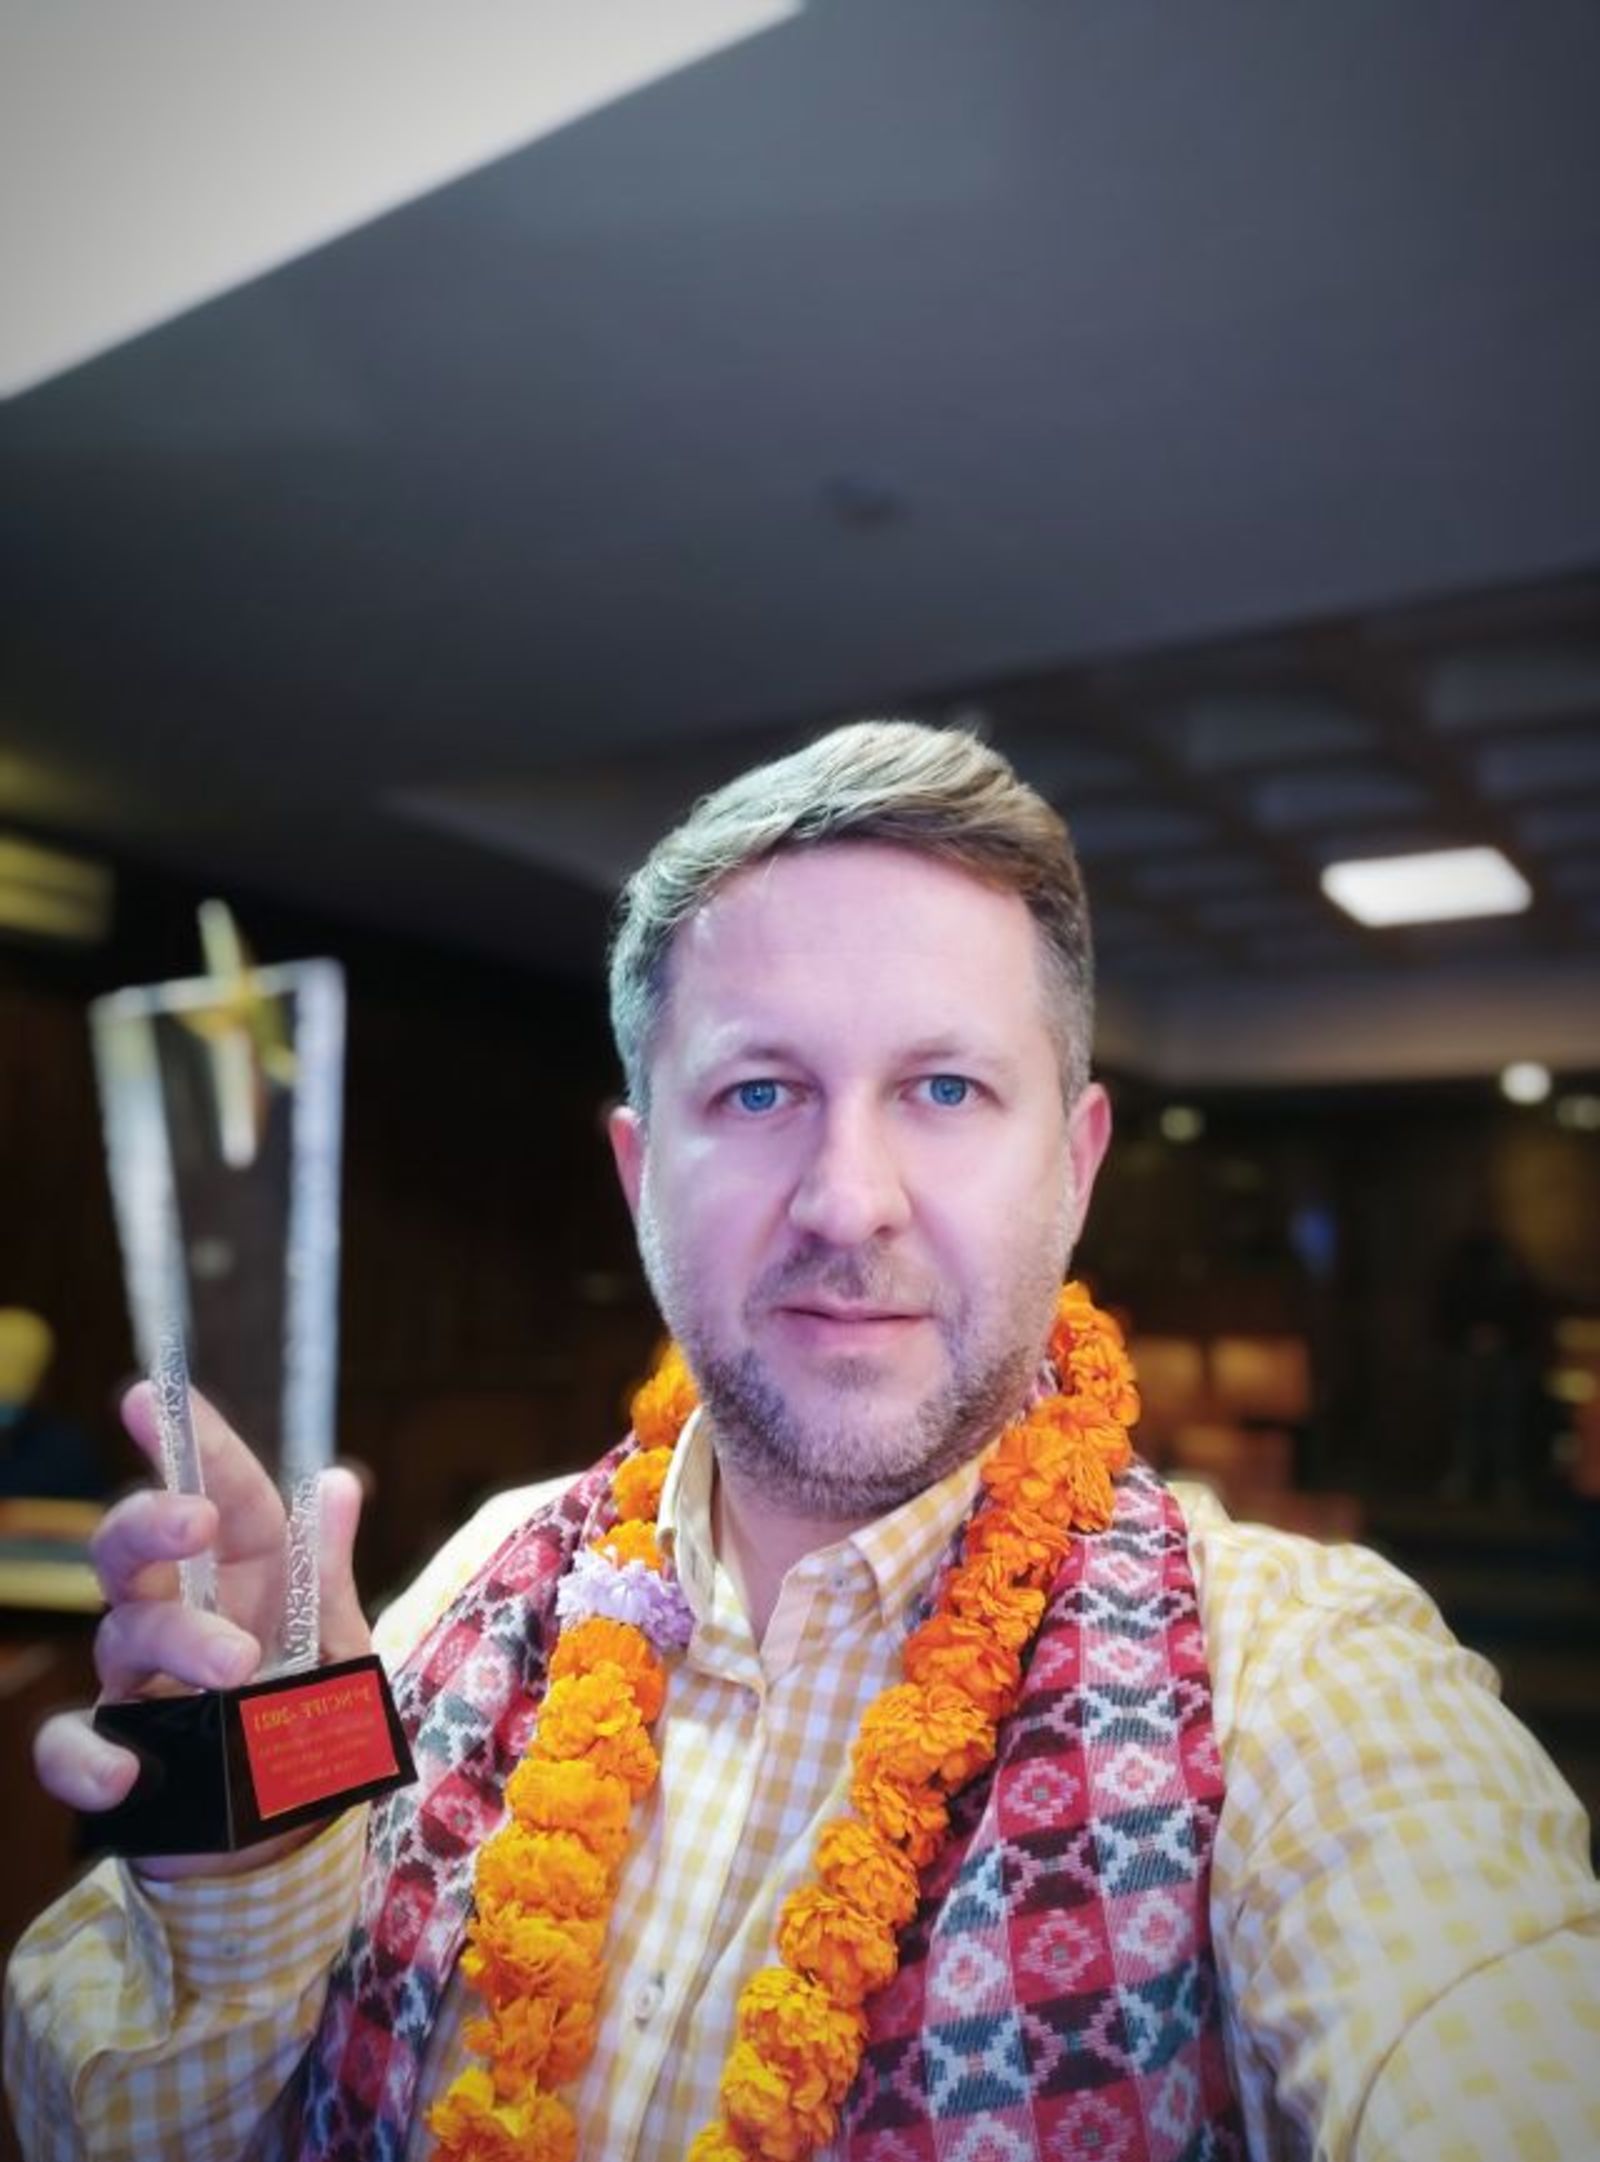 The Film “Antarctica” by Jivko Konstantinov Wins Grand Prize at Kathmandu International Film Festival, Nepal